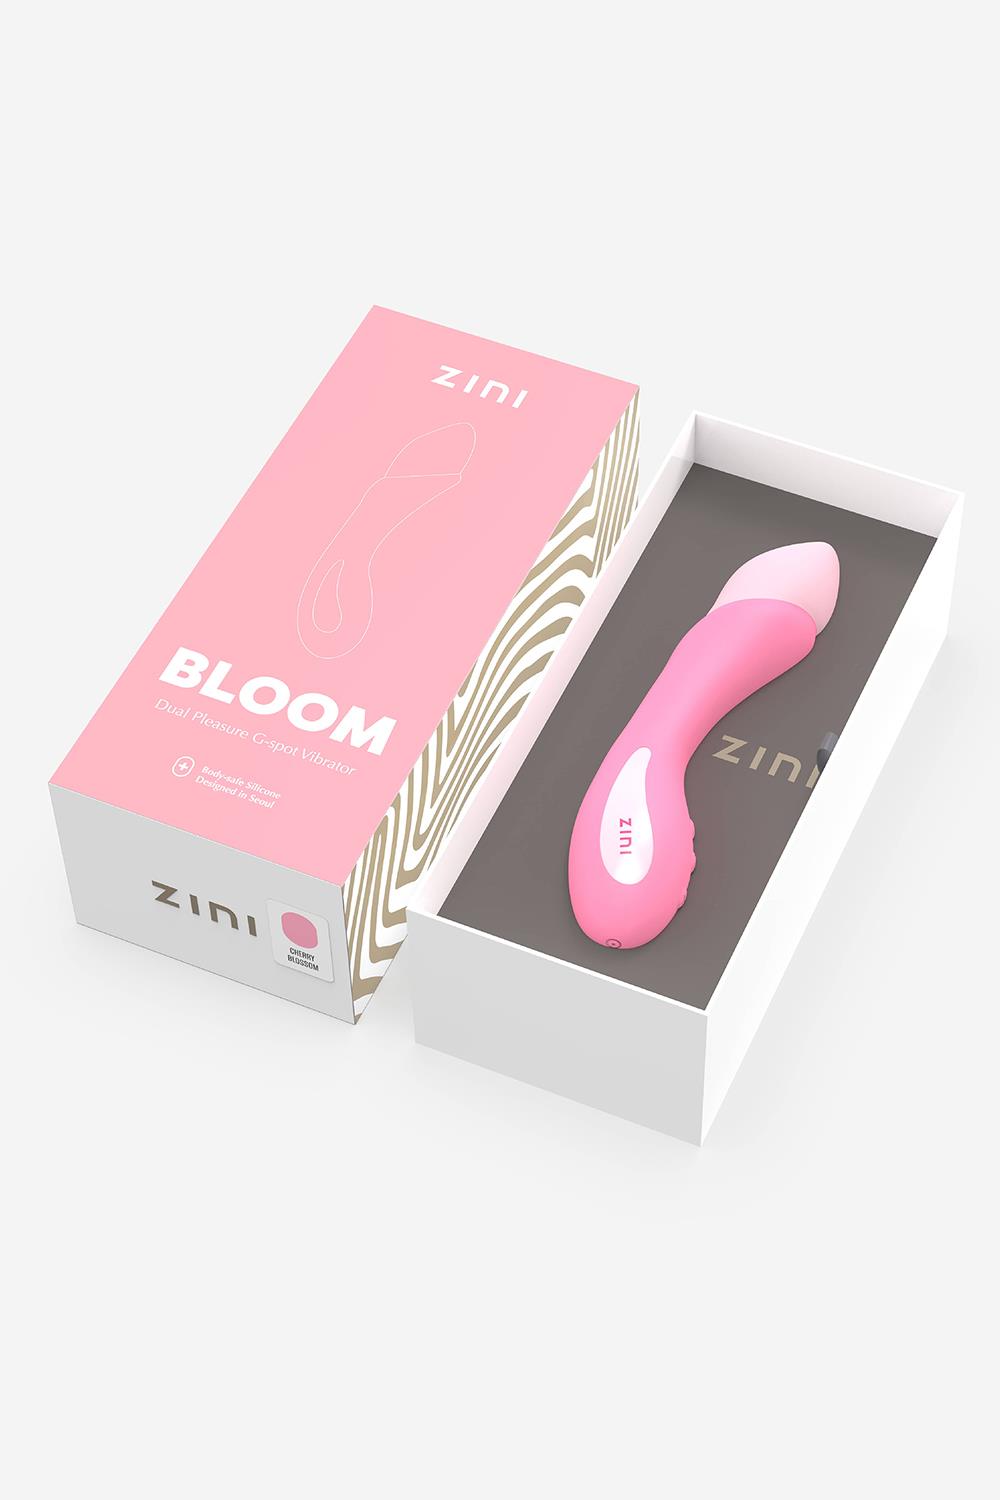 Zini - Bloom Cherry Blossom  - G-Spot  Vibrator